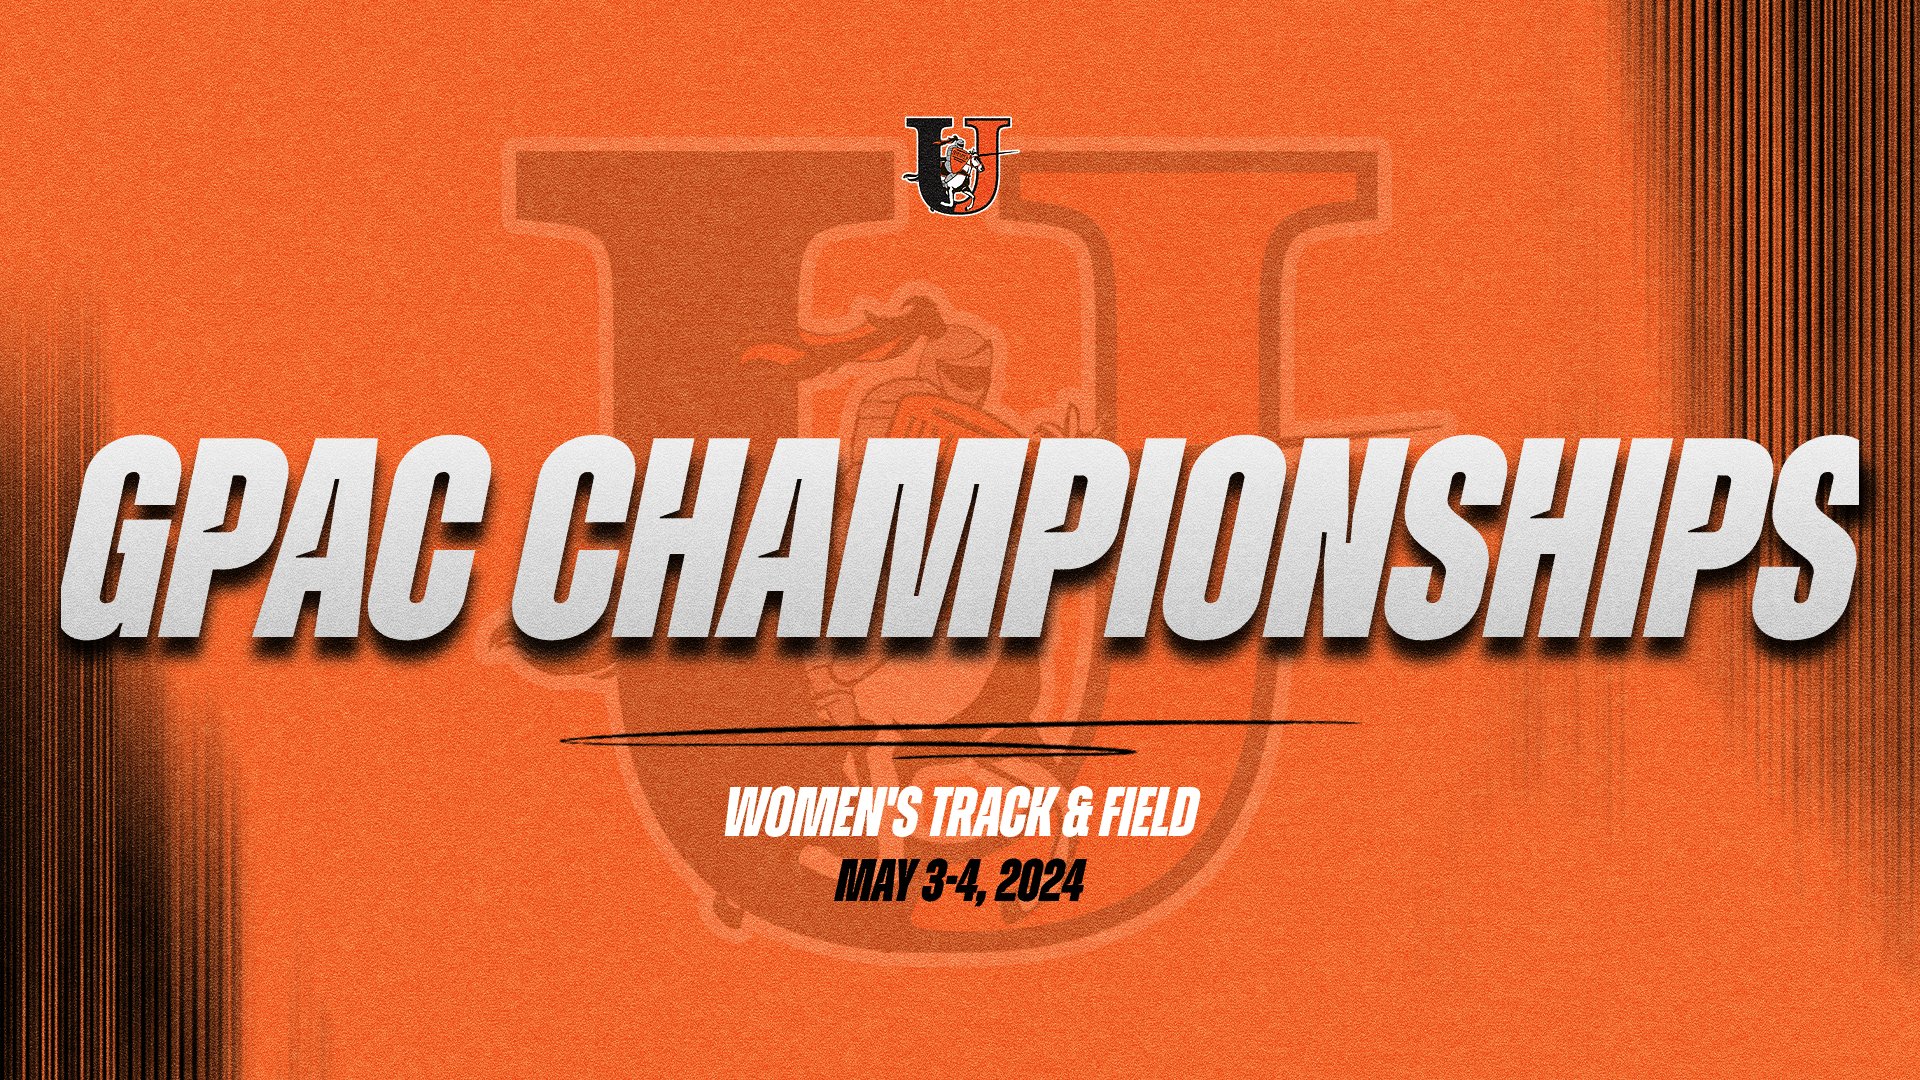 Women's track & field - GPAC Championships